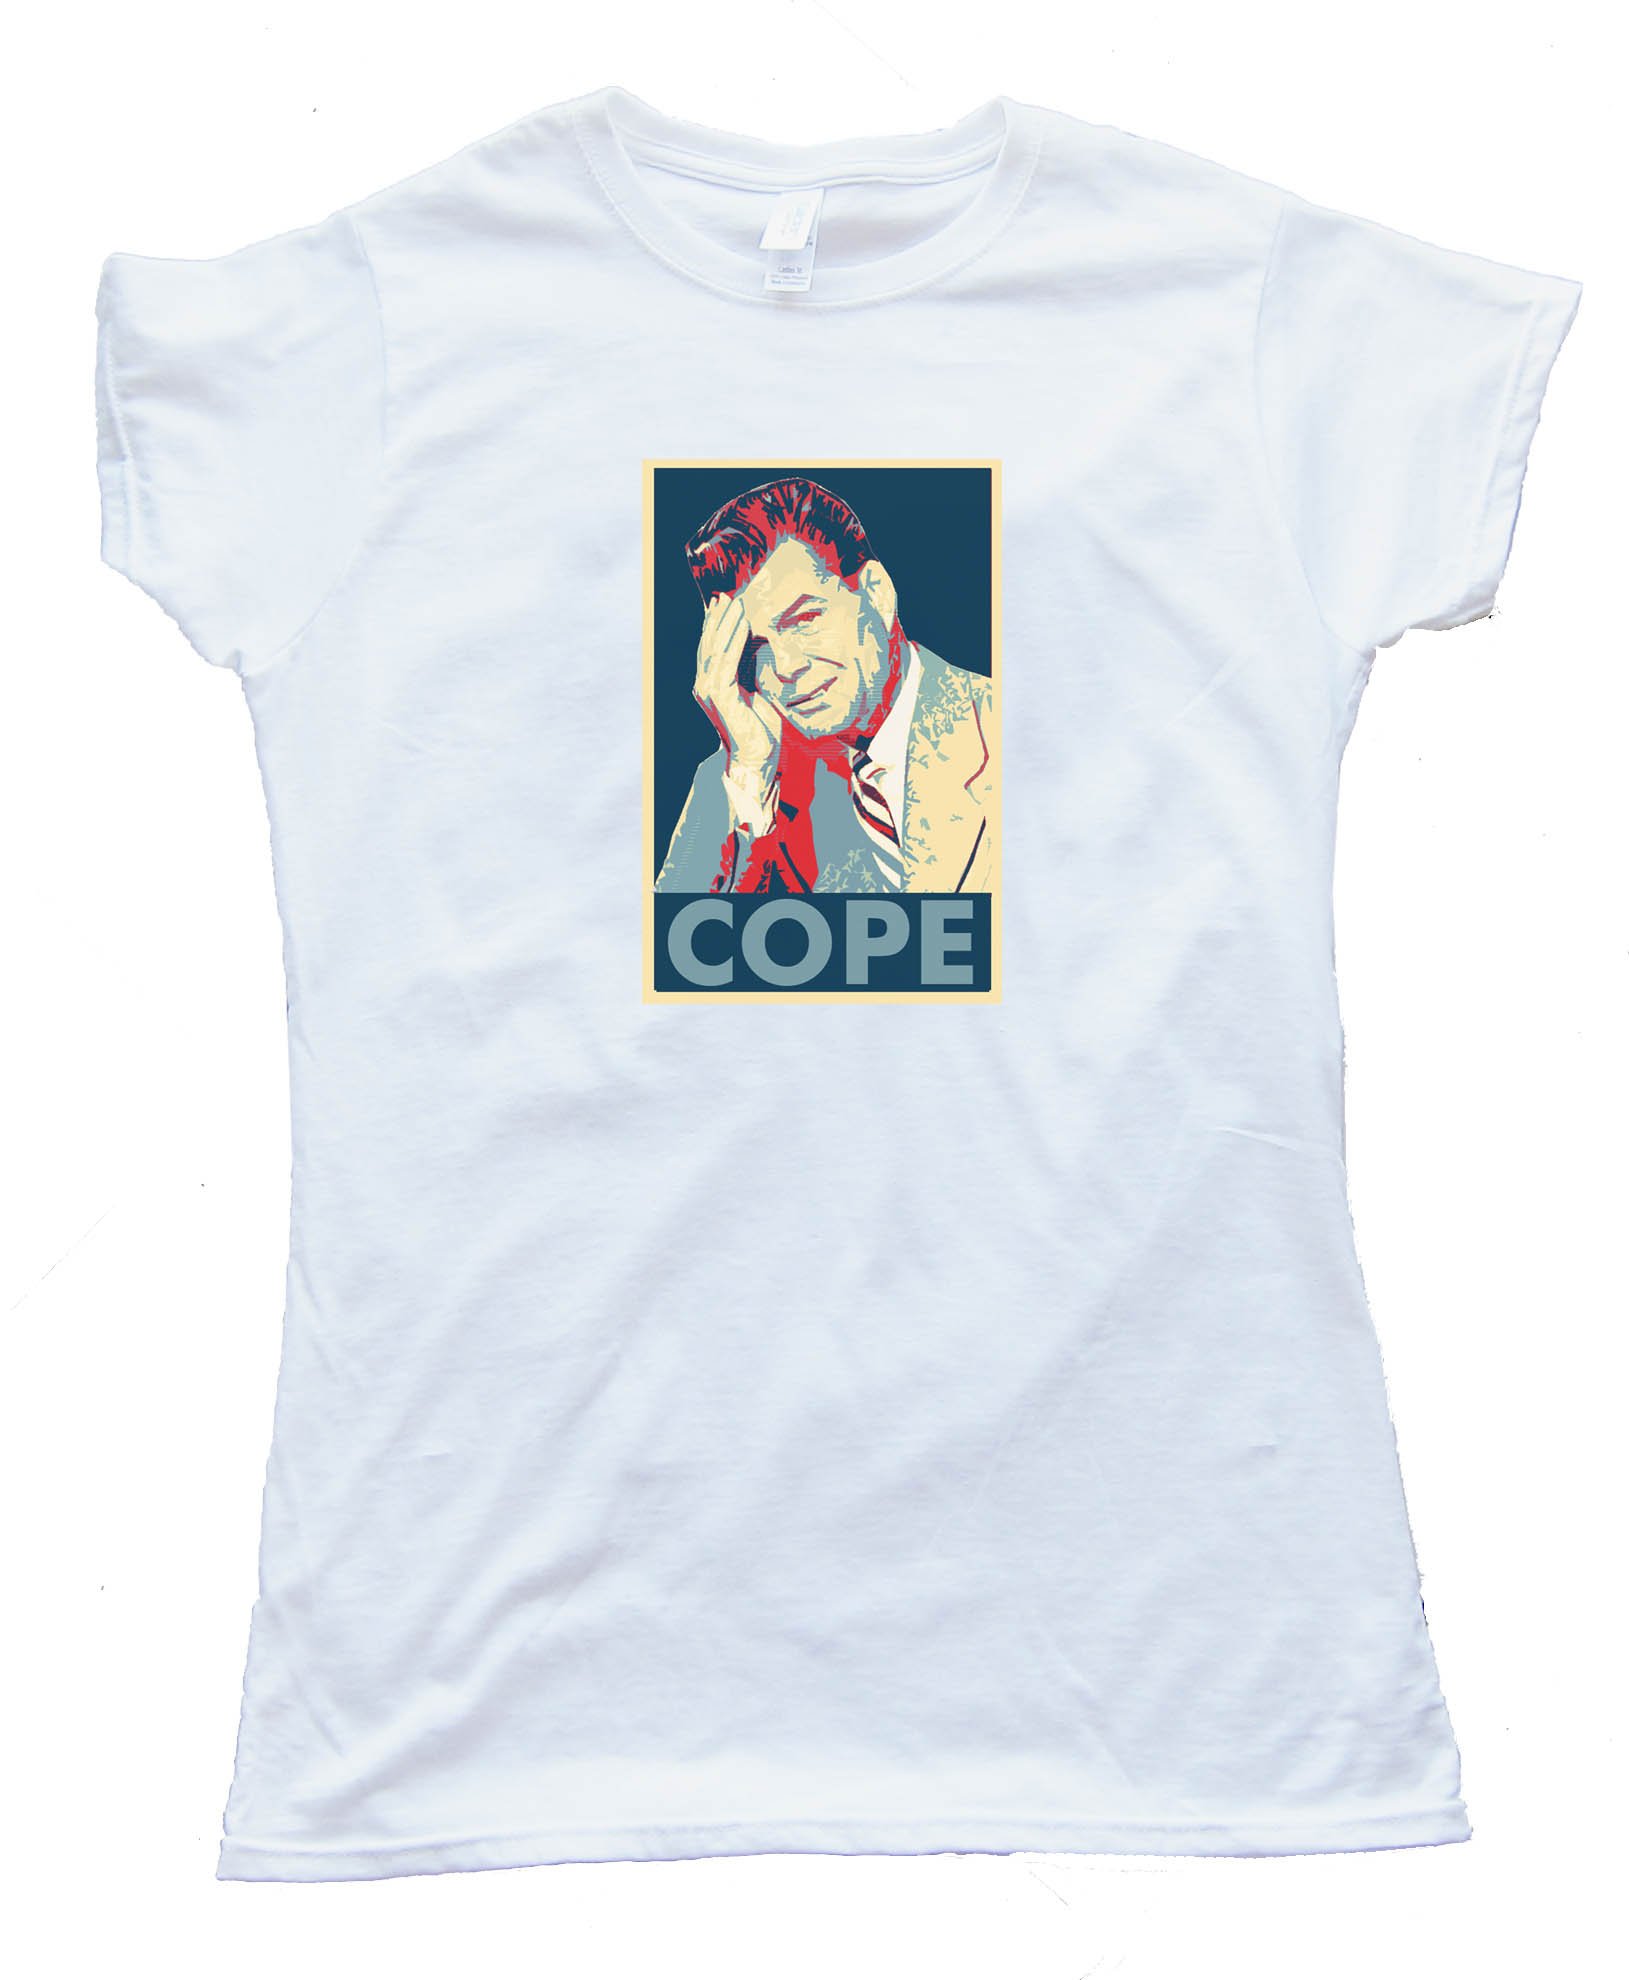 Womens Cope Obama Facepalm Hope - Tee Shirt